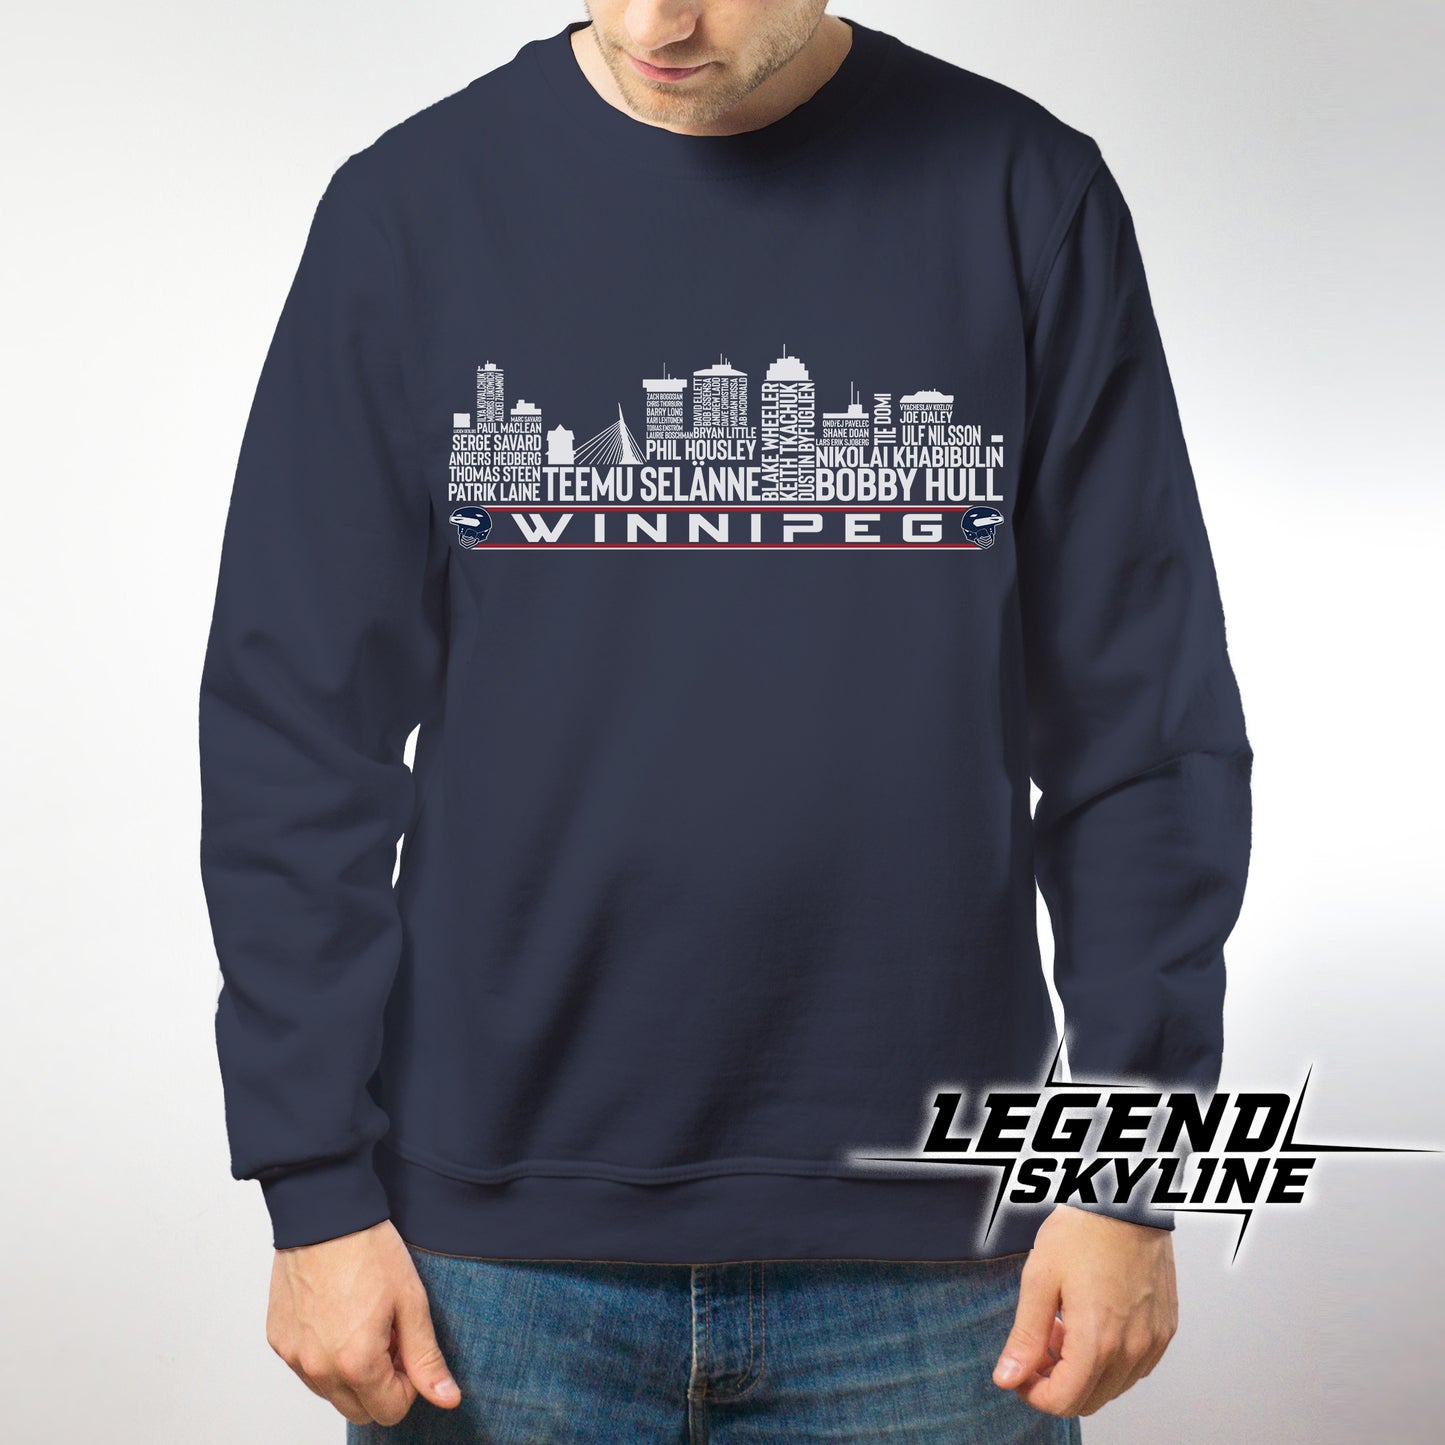 Winnipeg Hockey Team All Time Legends Winnipeg Skyline Shirt